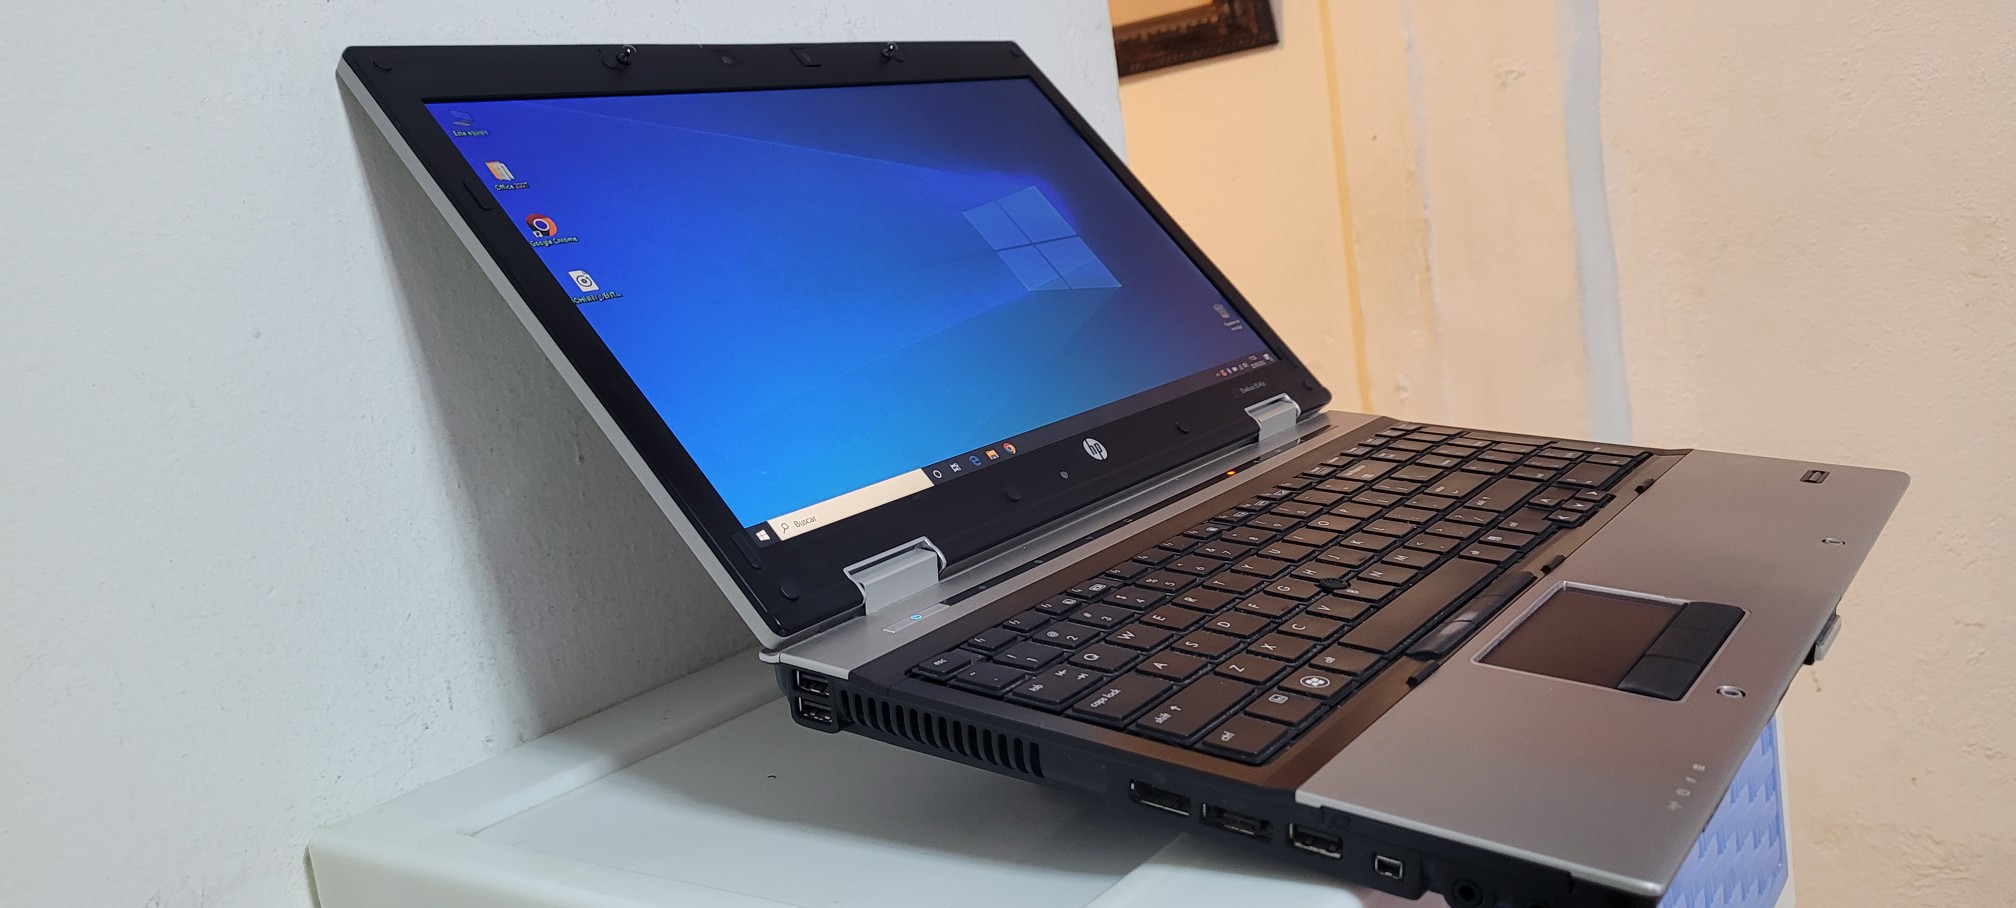 computadoras y laptops - Laptop hp 17 Pulg Core i7 Ram 8gb Disco SSD 128GB Nvidea 4gb Disponible 1